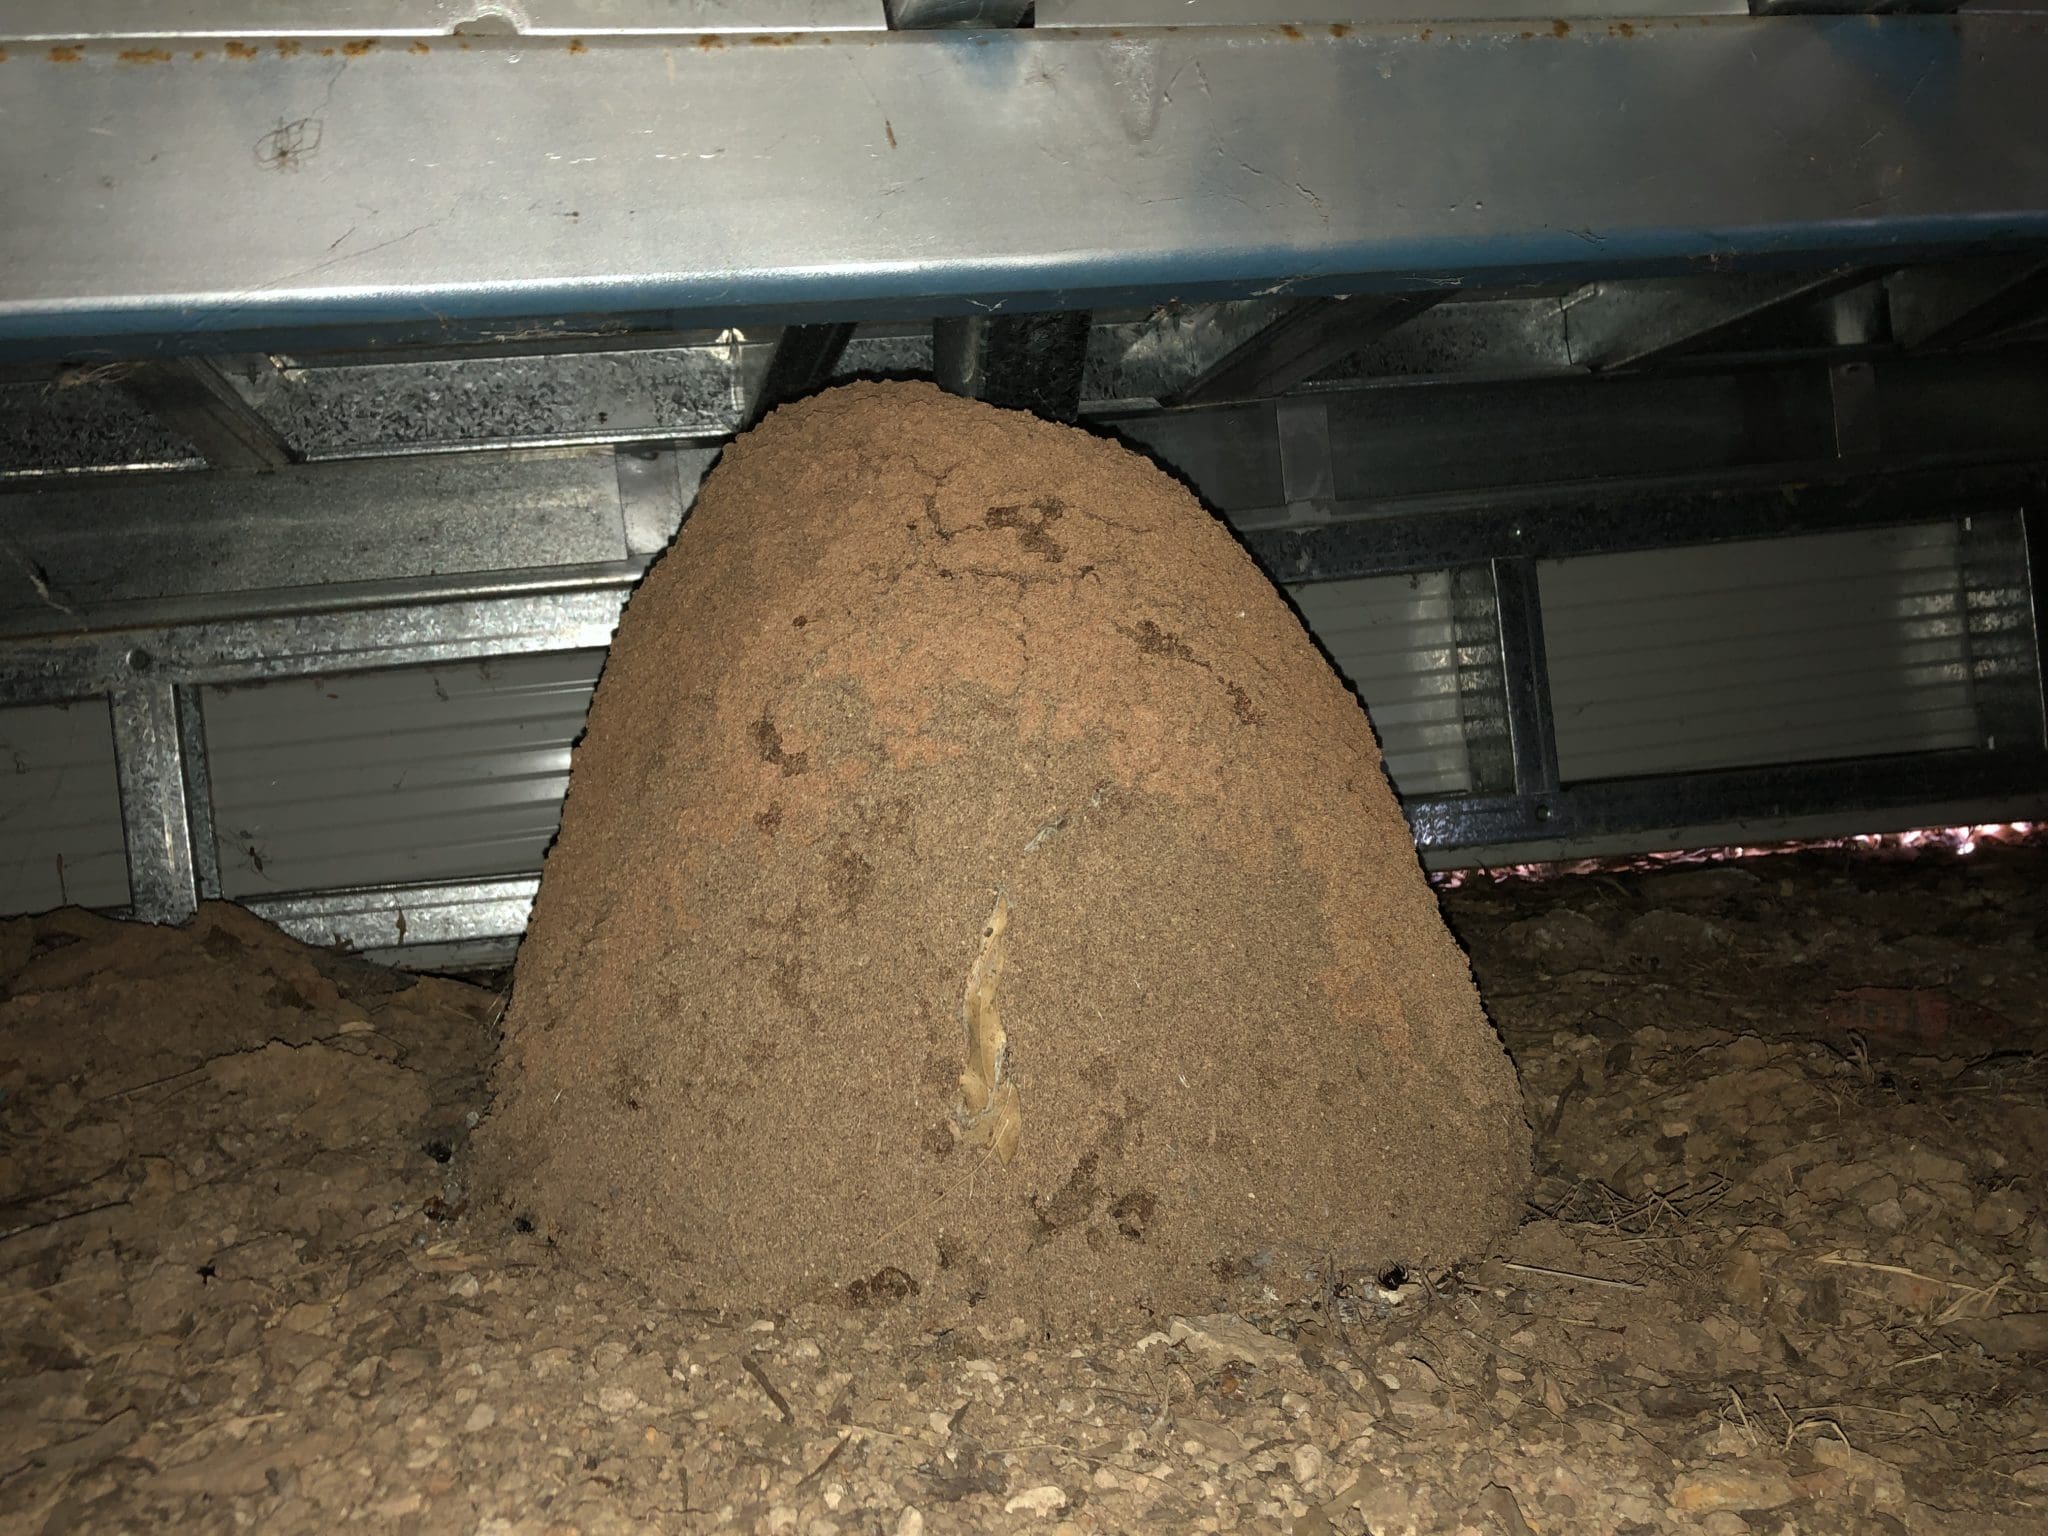 A Termite Nest Under A Building